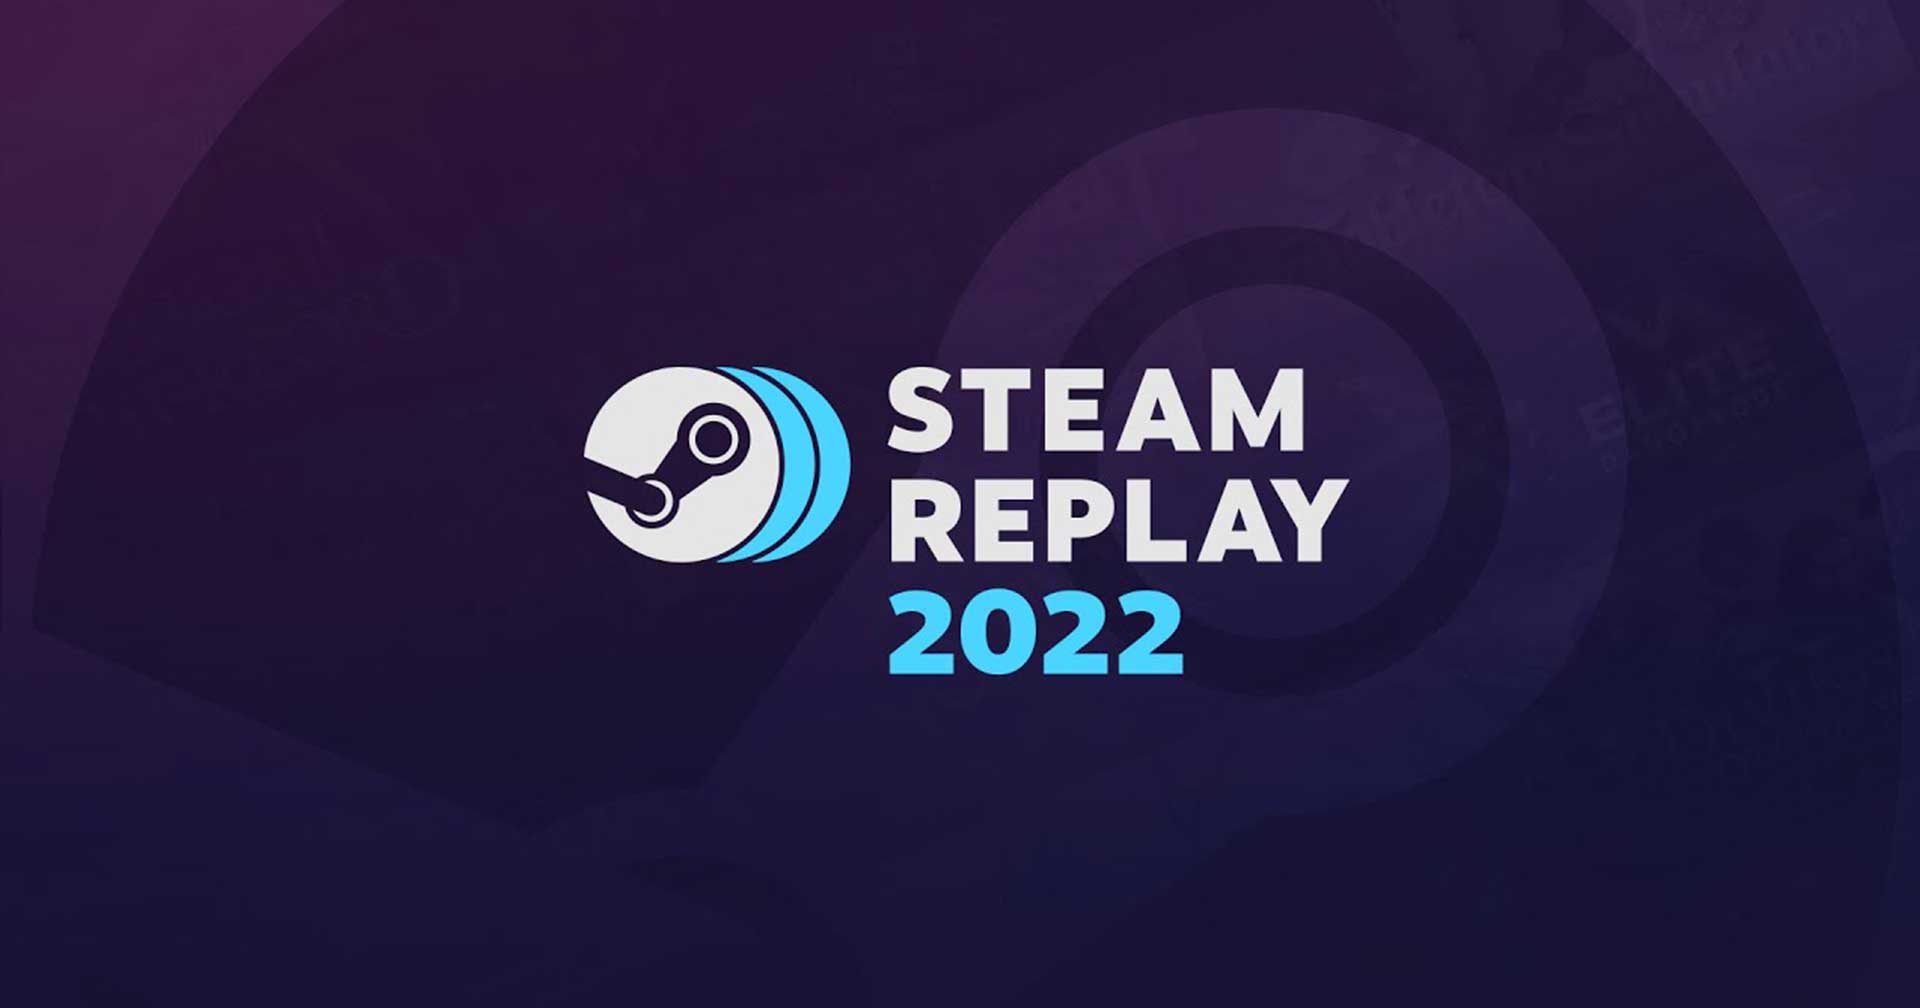 Steam เปิดตัวฟีเจอร์ Replay ให้เกมเมอร์ได้ย้อนรอยตัวเองในปี 2022